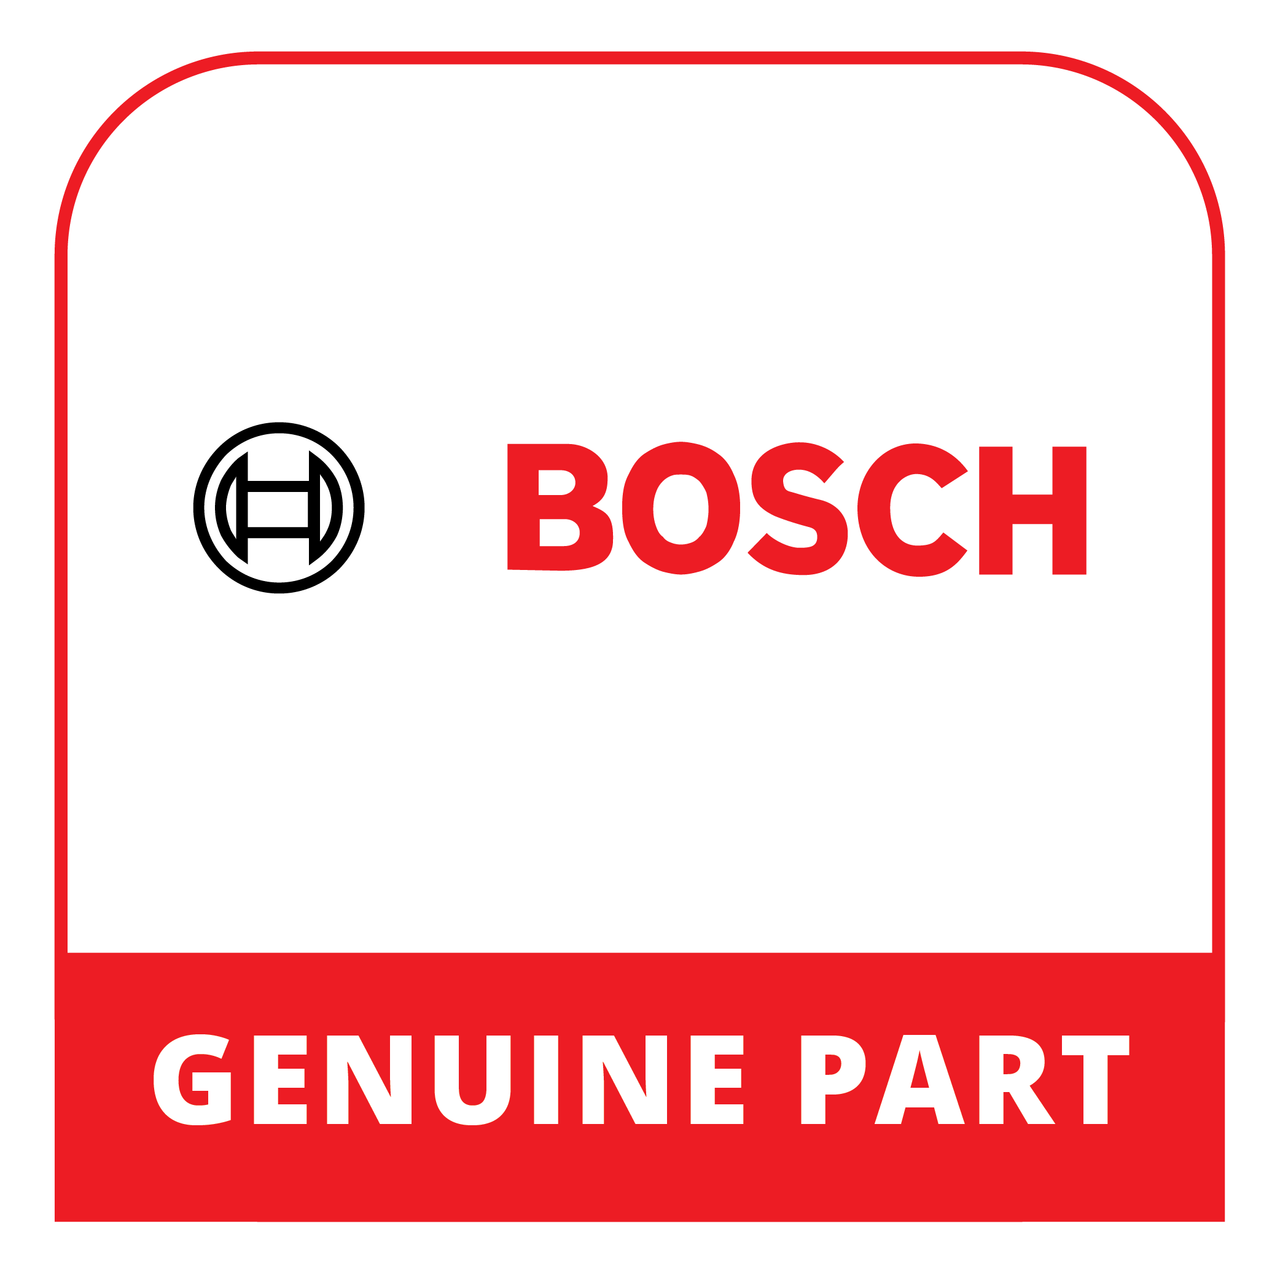 Bosch (Thermador) 10010274 - Screw - Genuine Bosch (Thermador) Part